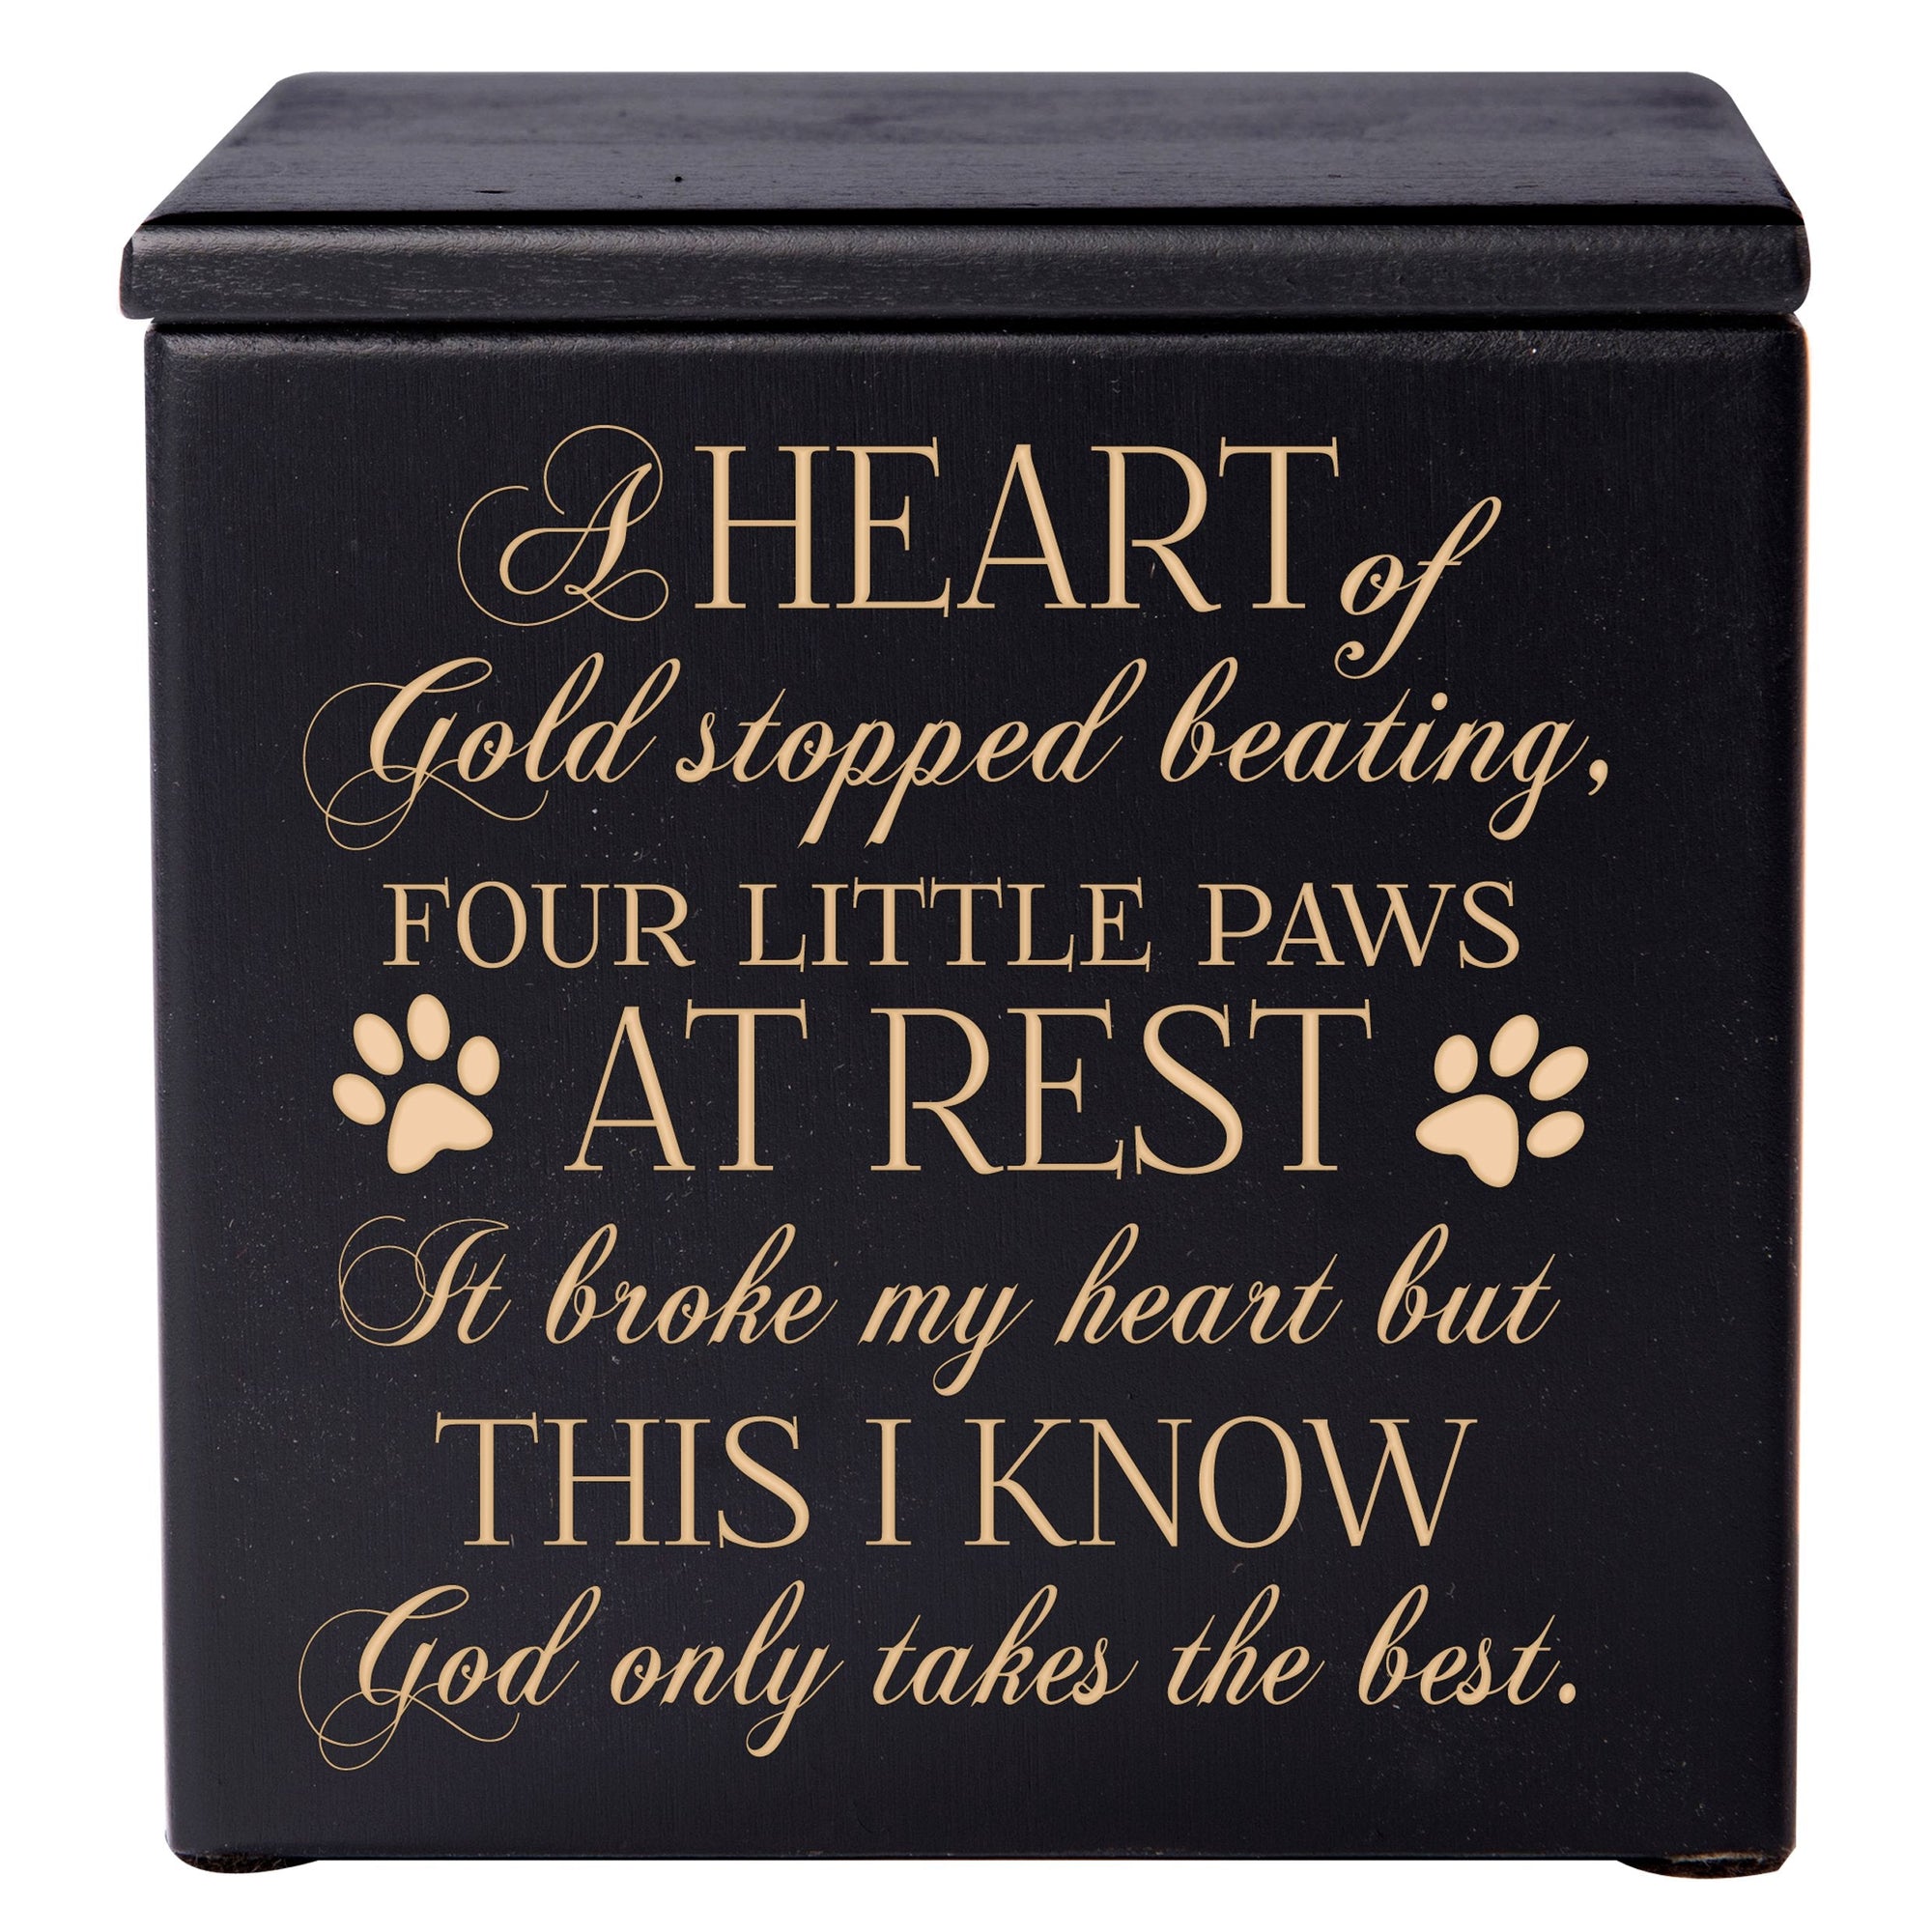 Black Pet Memorial 3.5x3.5 Keepsake Urn with phrase "Heart of Gold"